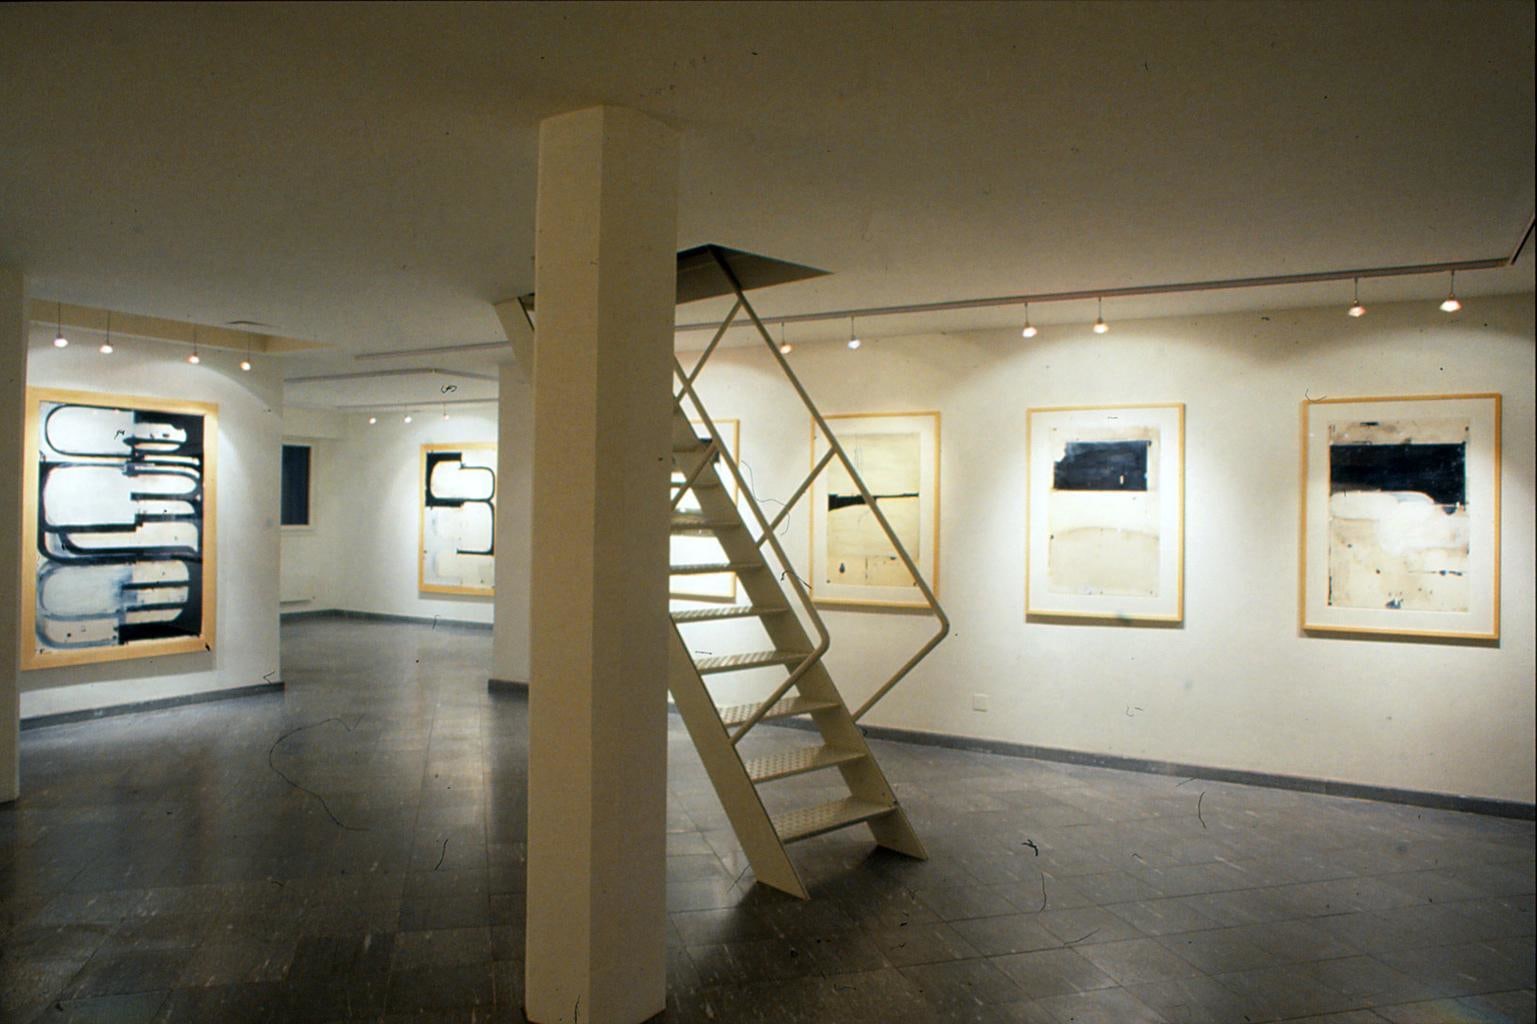  Installation View, John Millei: Drawings, Marc Jancou, Zurich, 1991